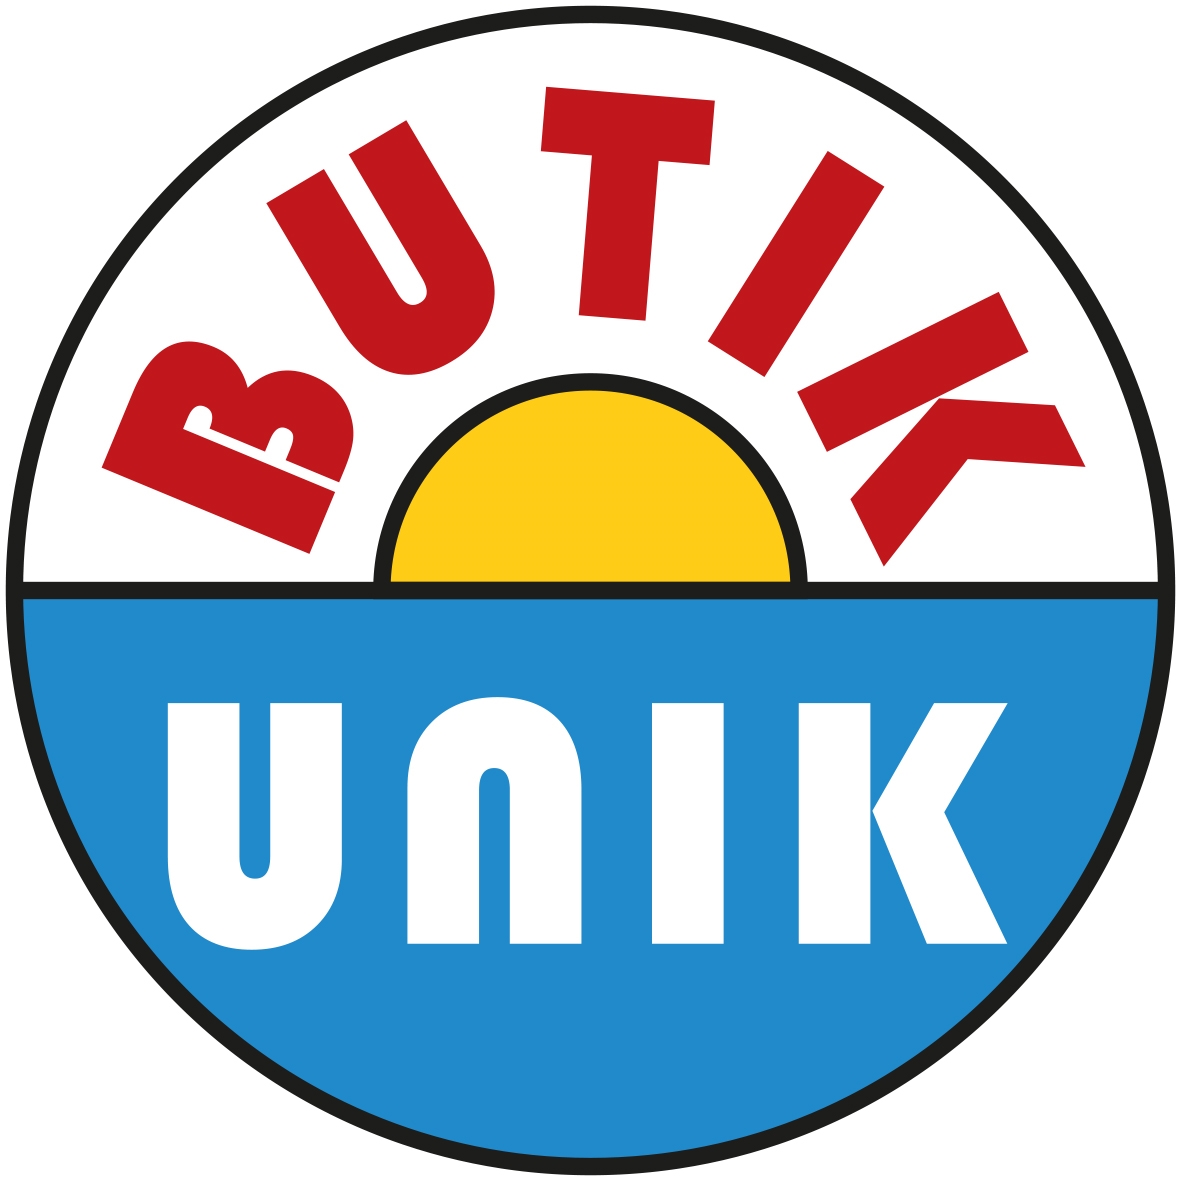 Butik Unik logo.jpg